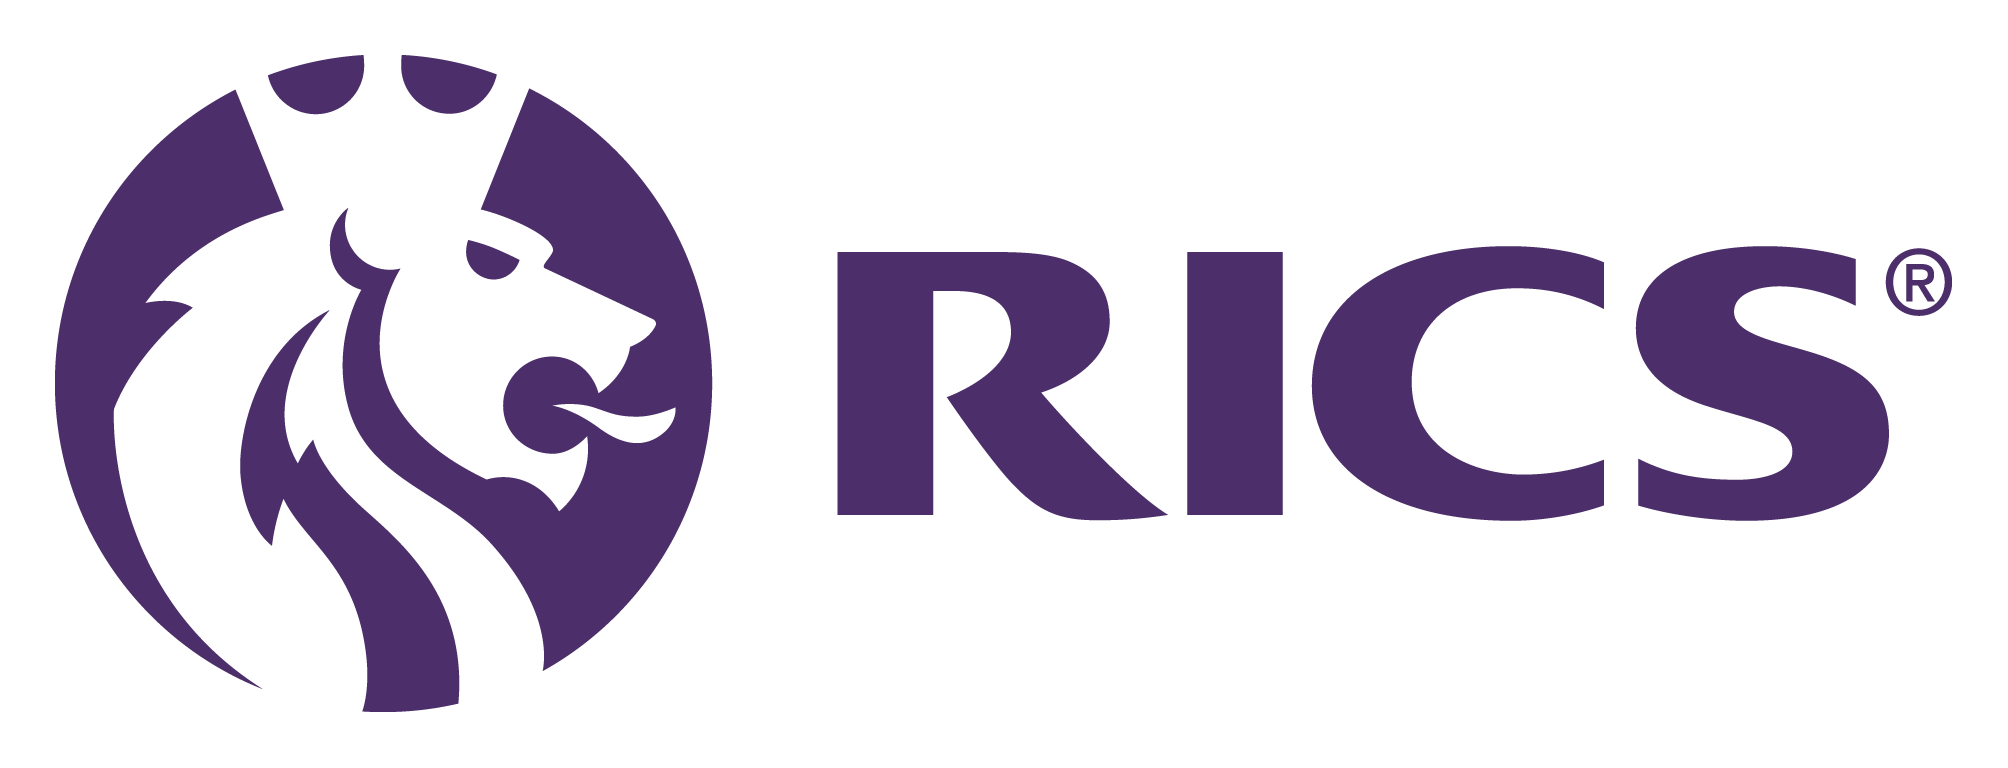 RICS - The mark of property professionalism worldwide